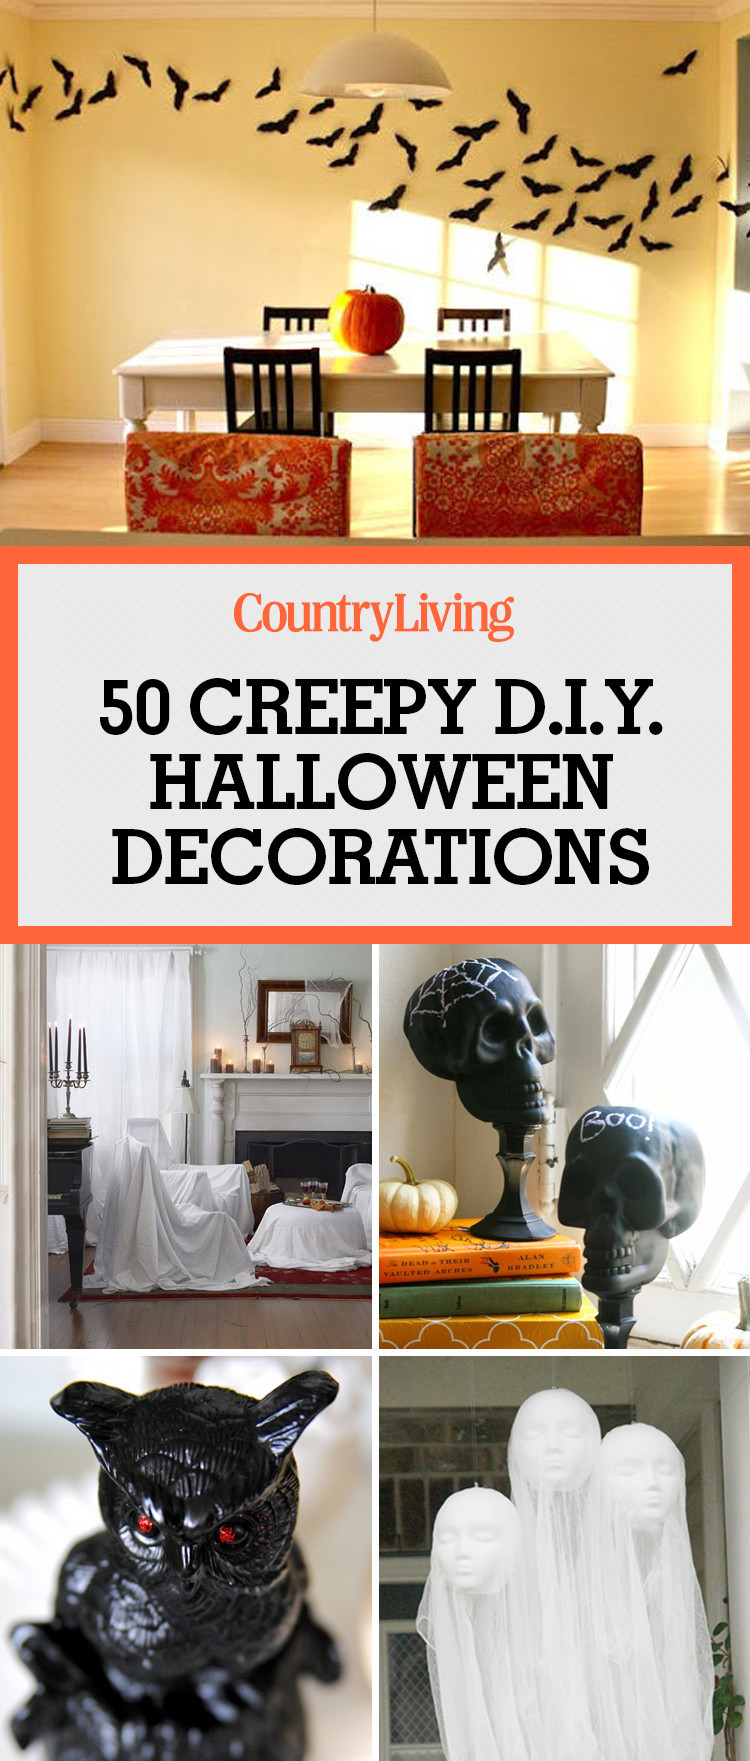 DIY Decorations For Halloween
 40 Easy DIY Halloween Decorations Homemade Do It